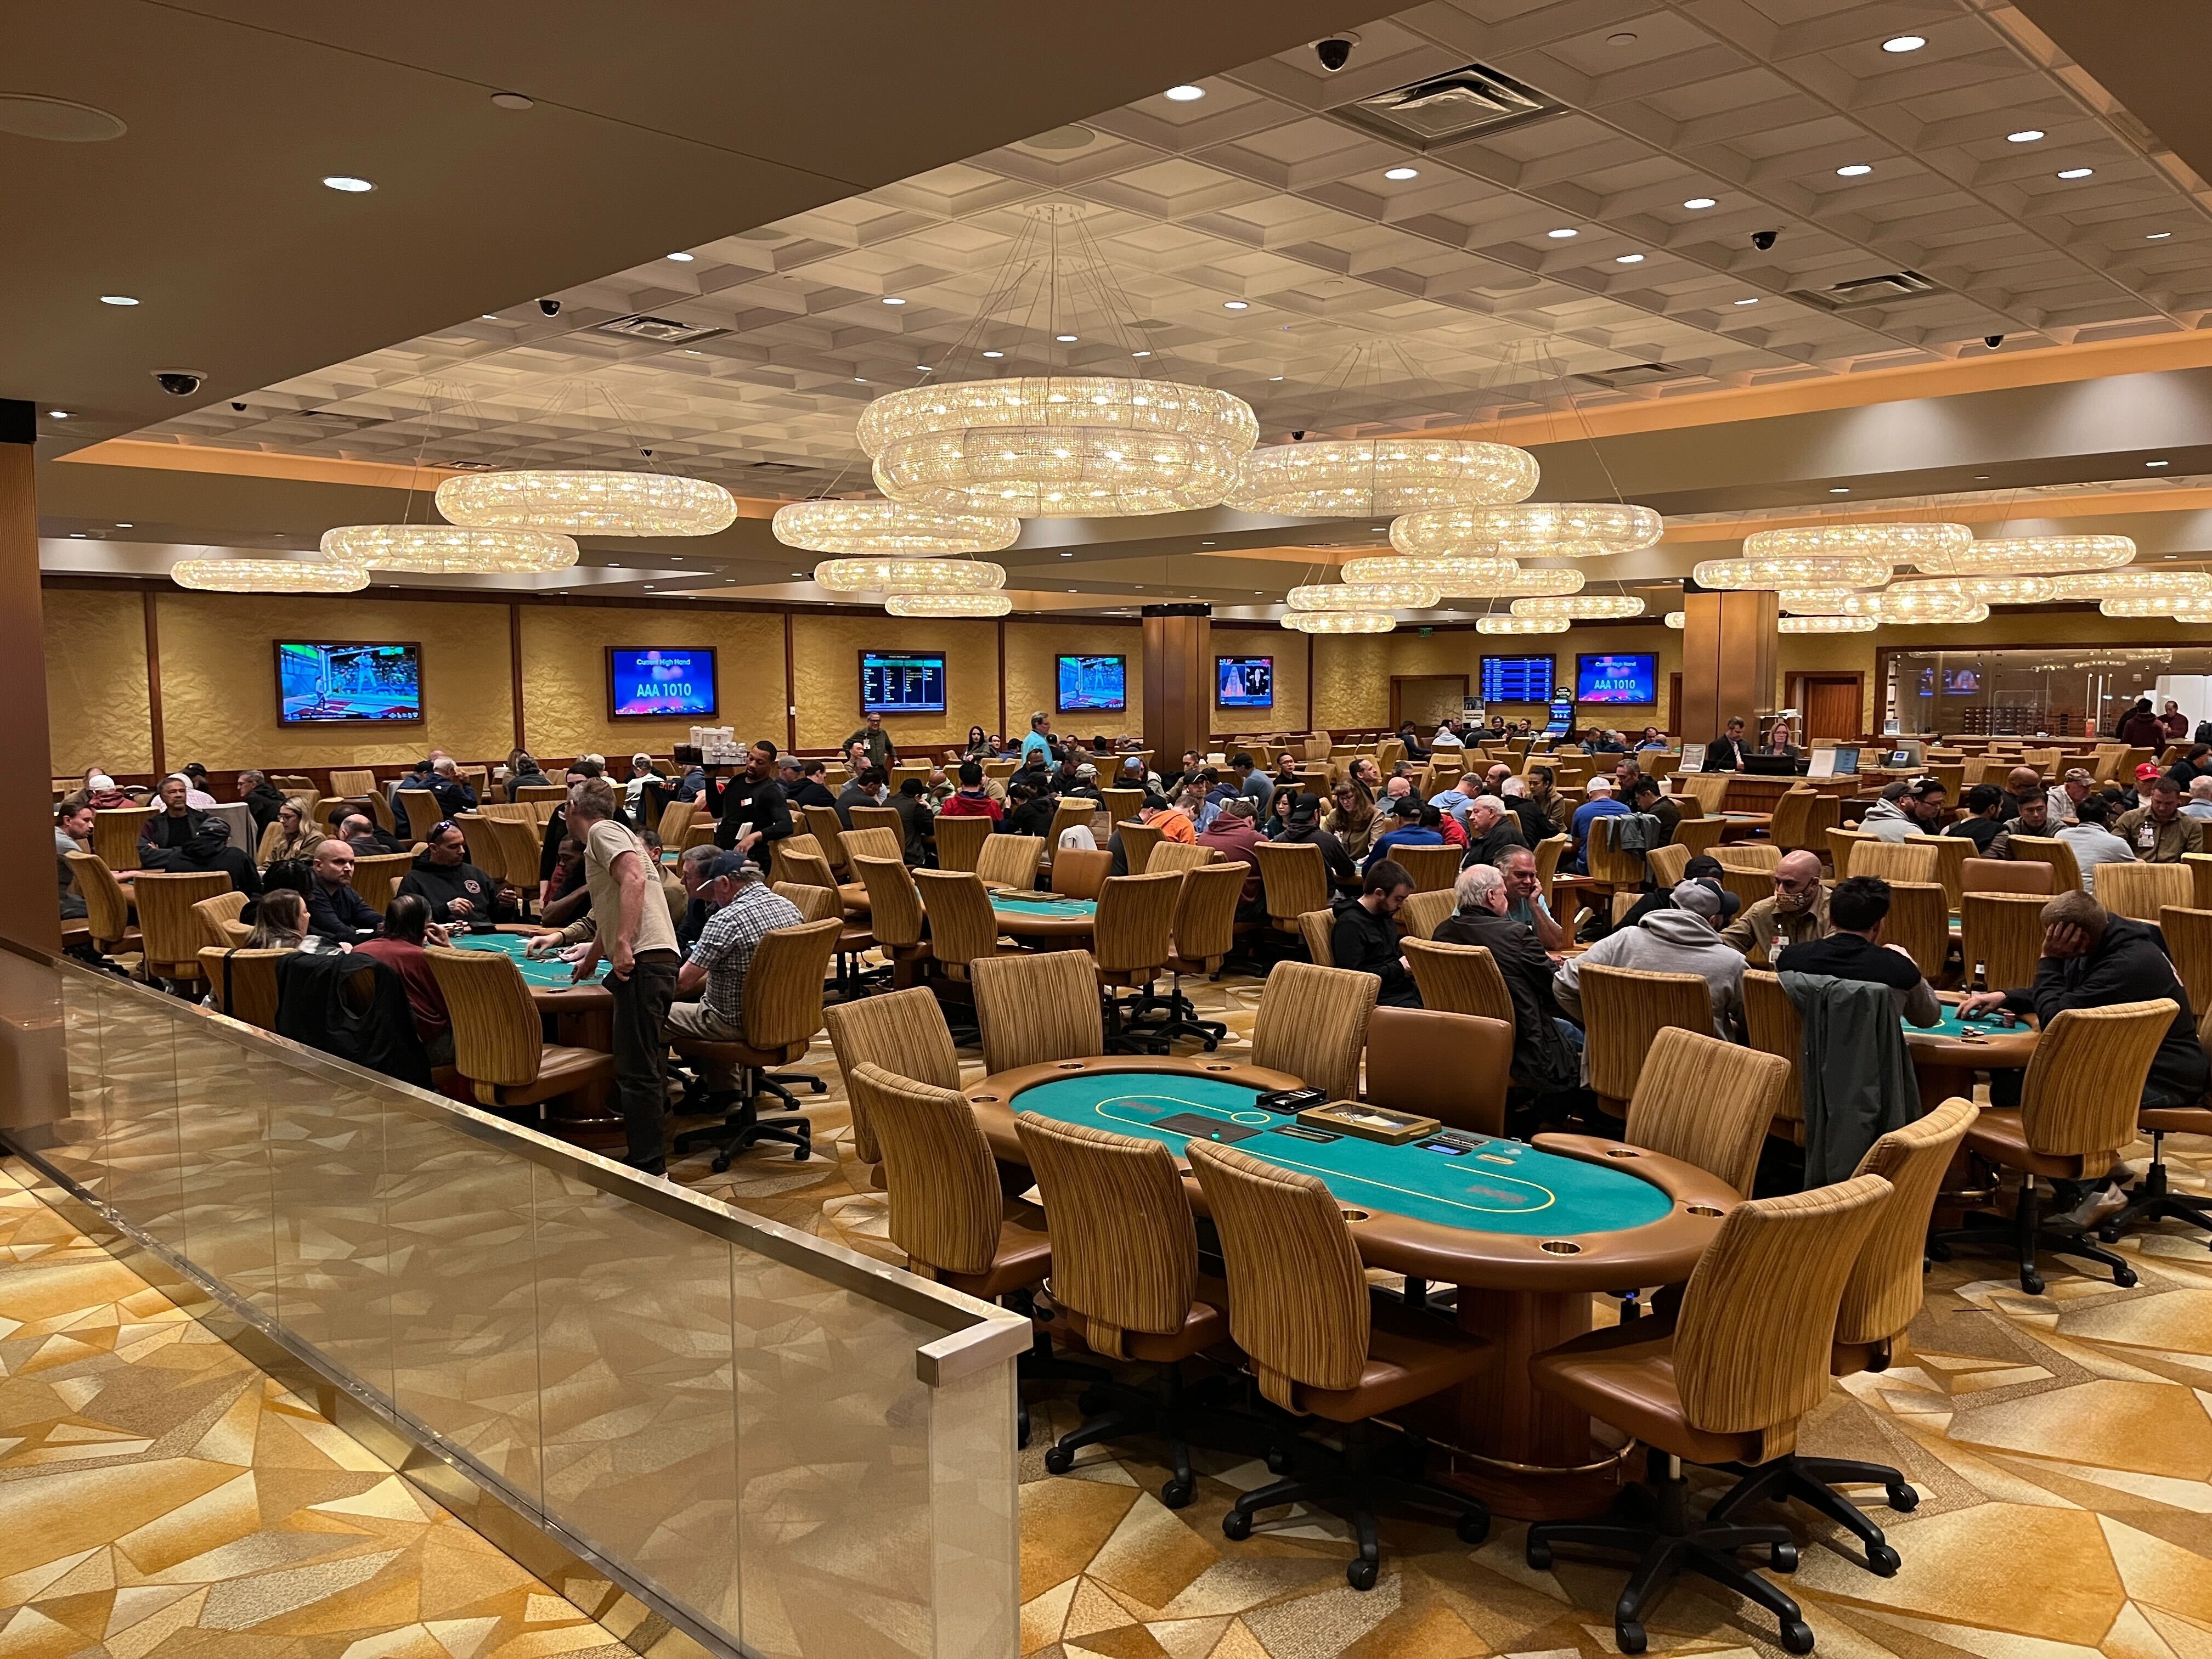 parx casino poker reopen